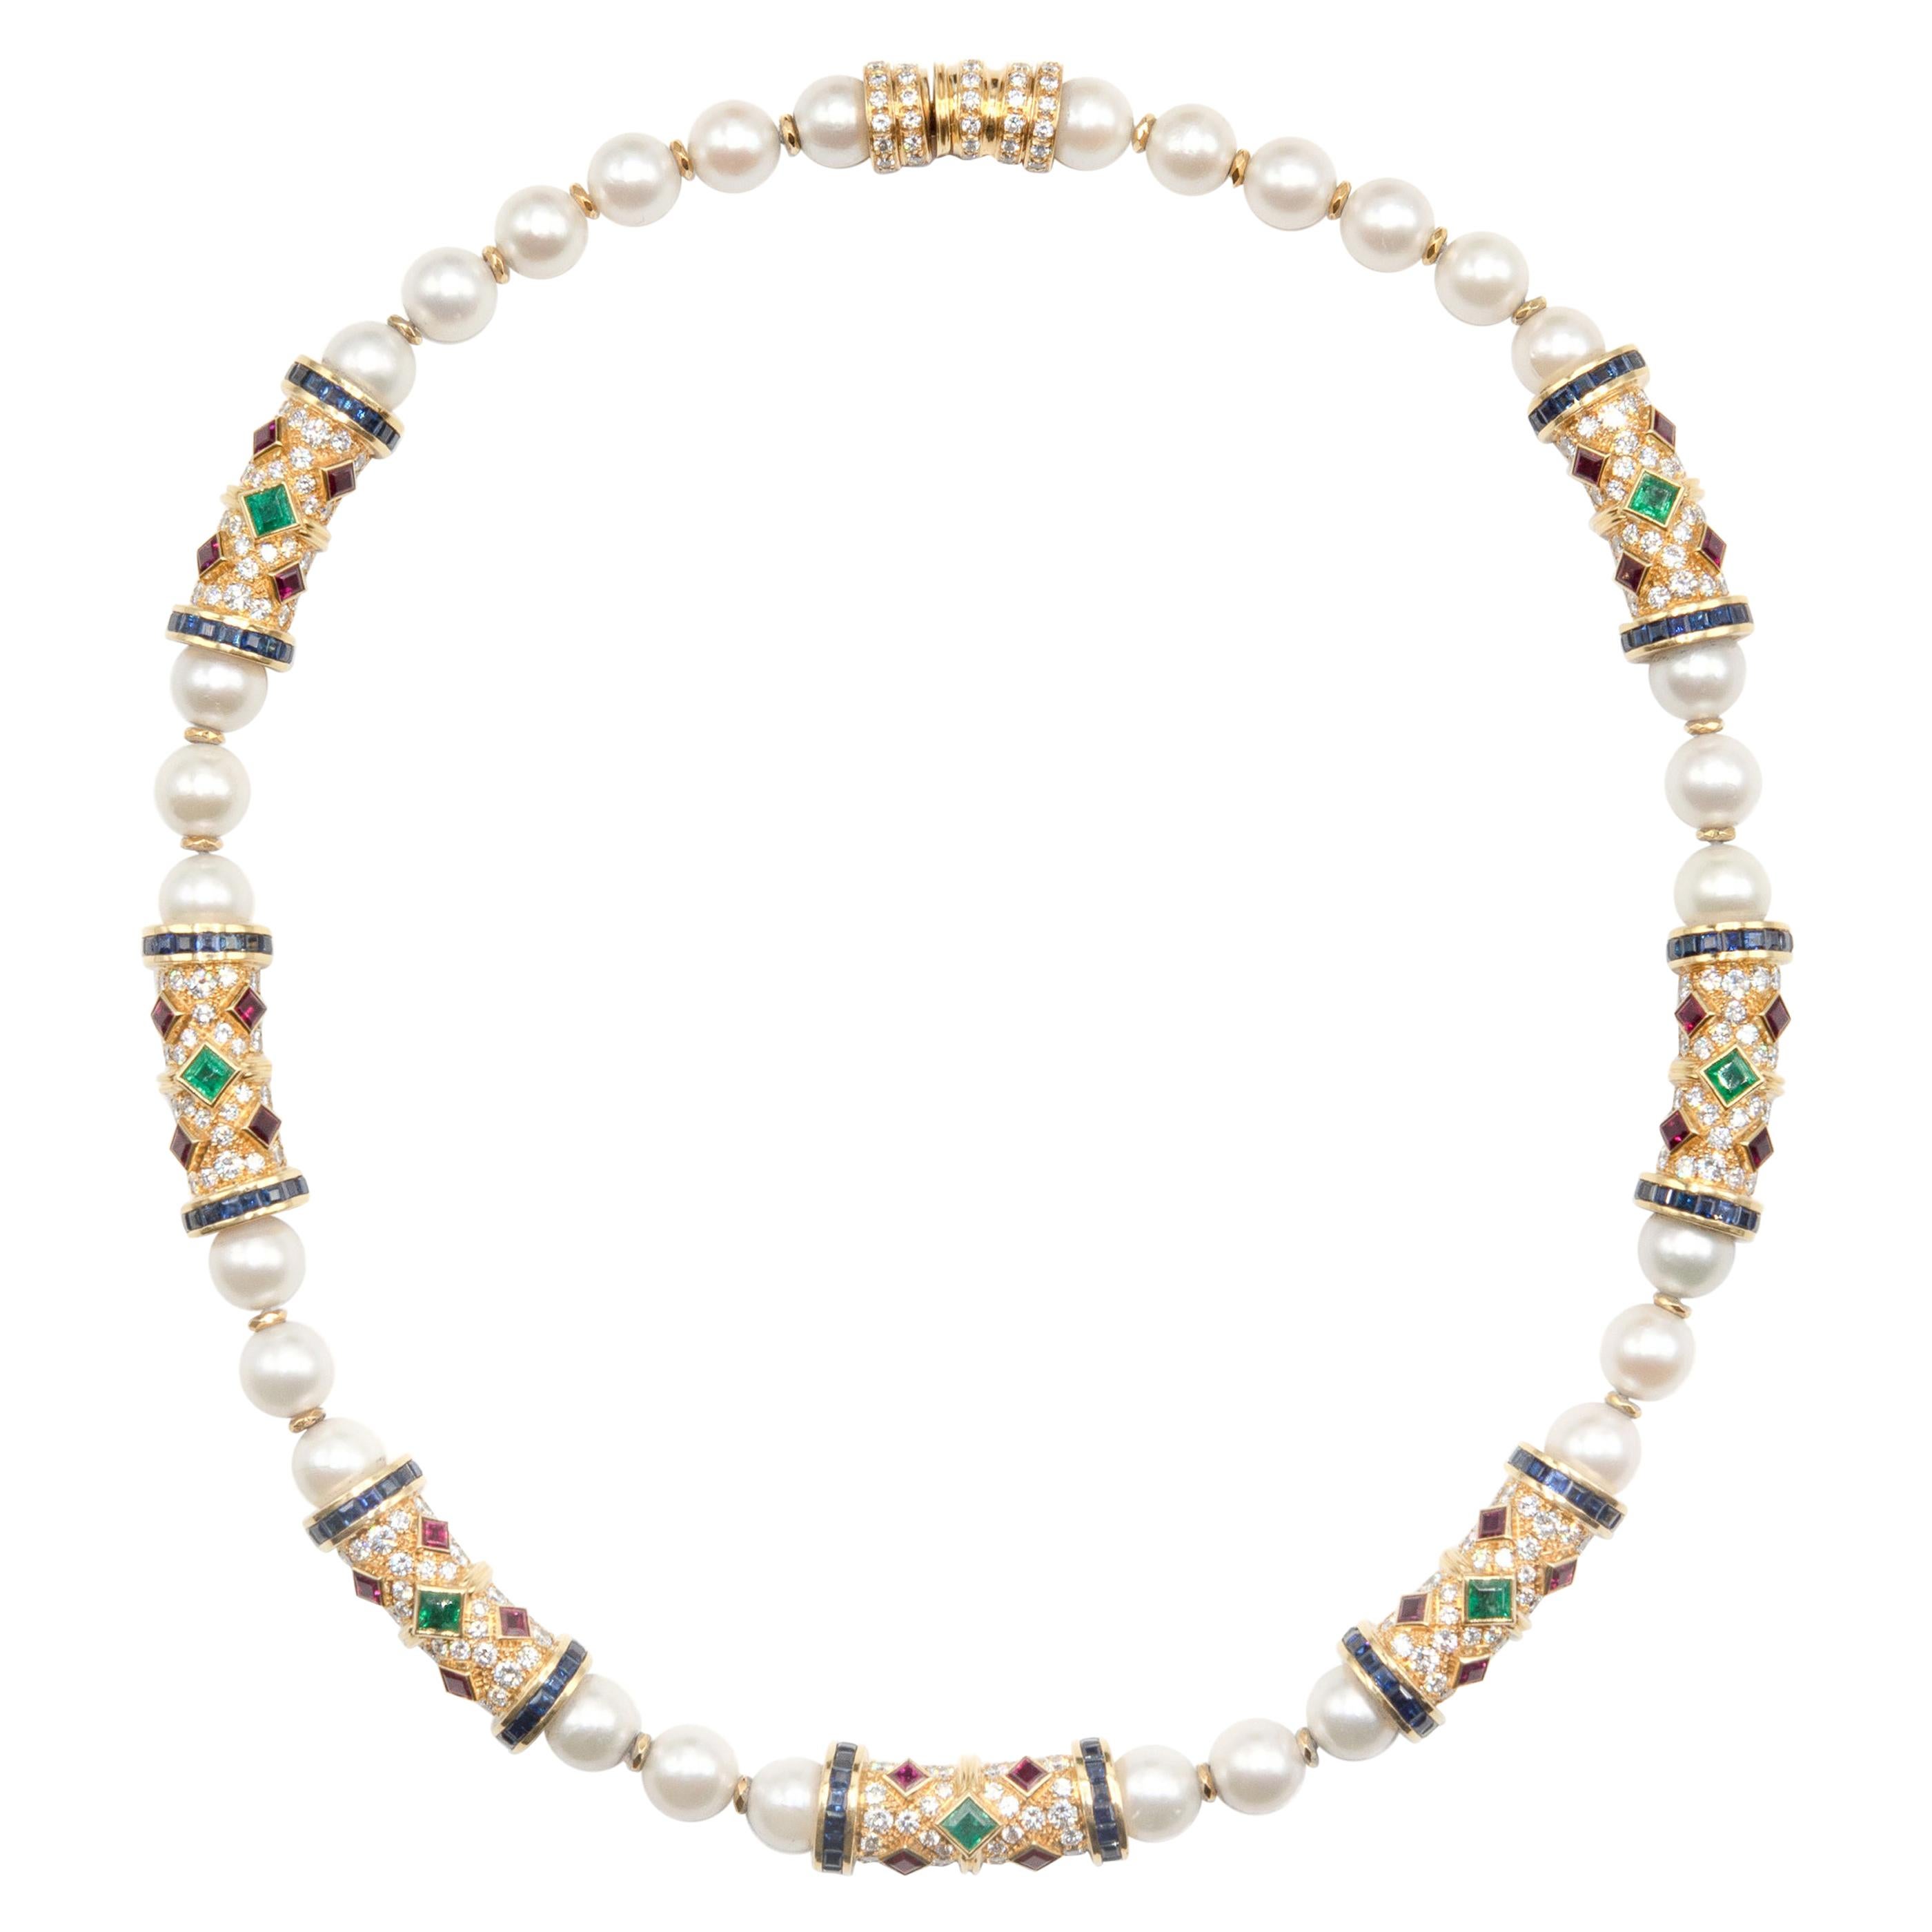 18KT 44.57 Carat Pearl and Gemstone Vintage Necklace